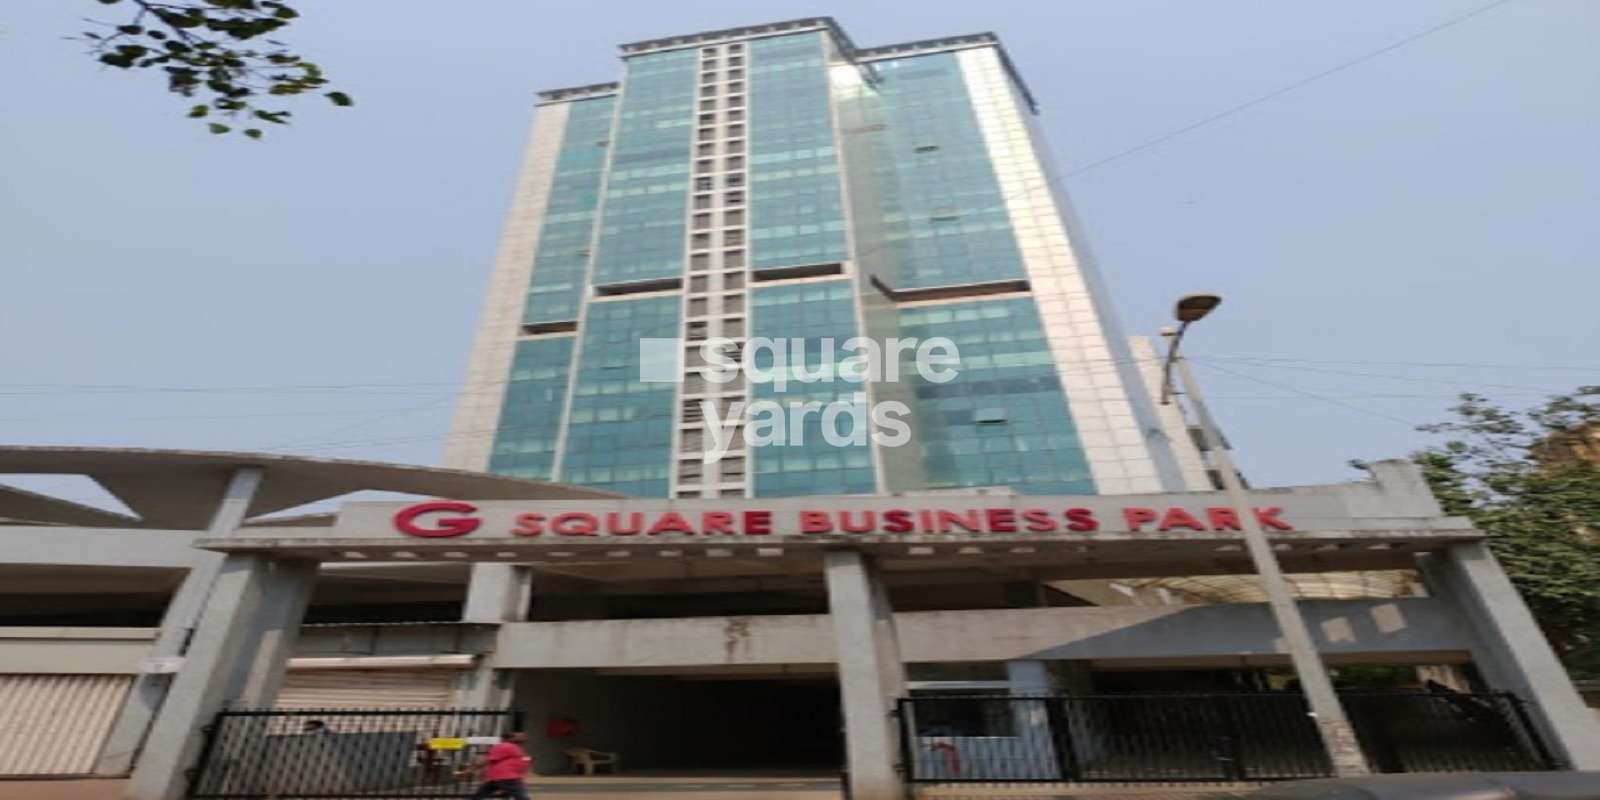 Gajra G Square Business Park Cover Image